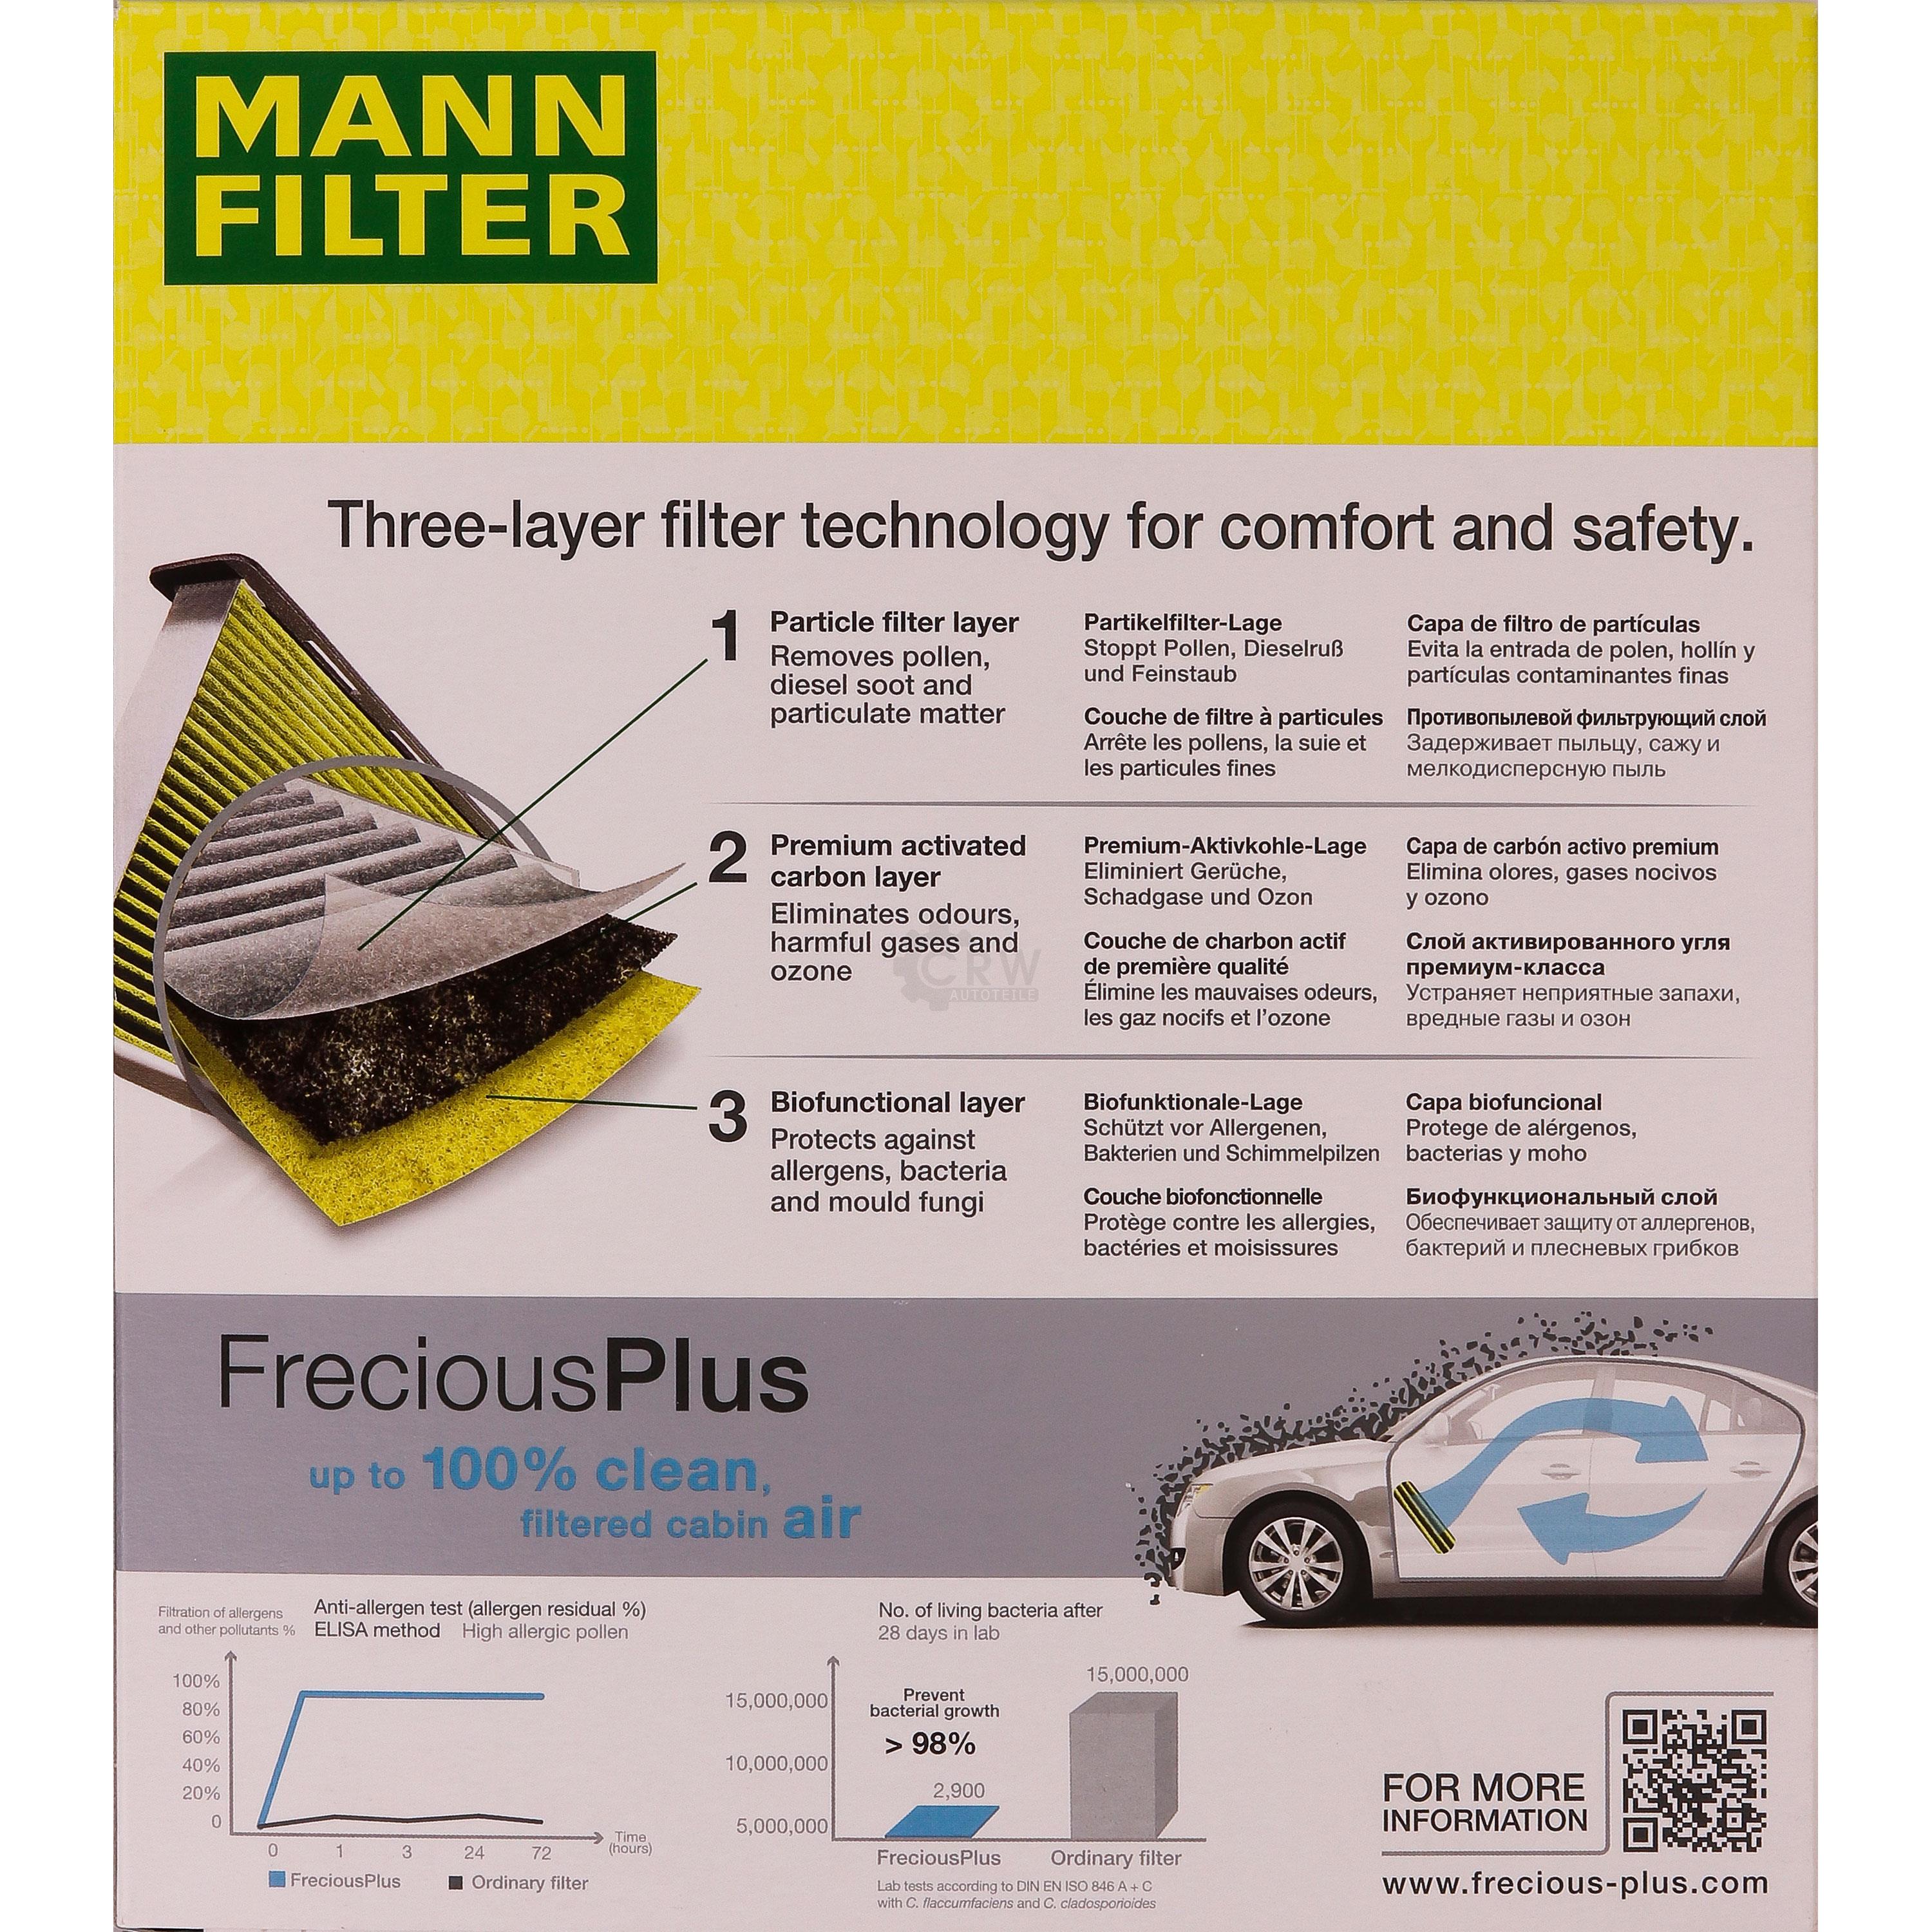 MANN-Filter Innenraumfilter Biofunctional für Allergiker FP 2141